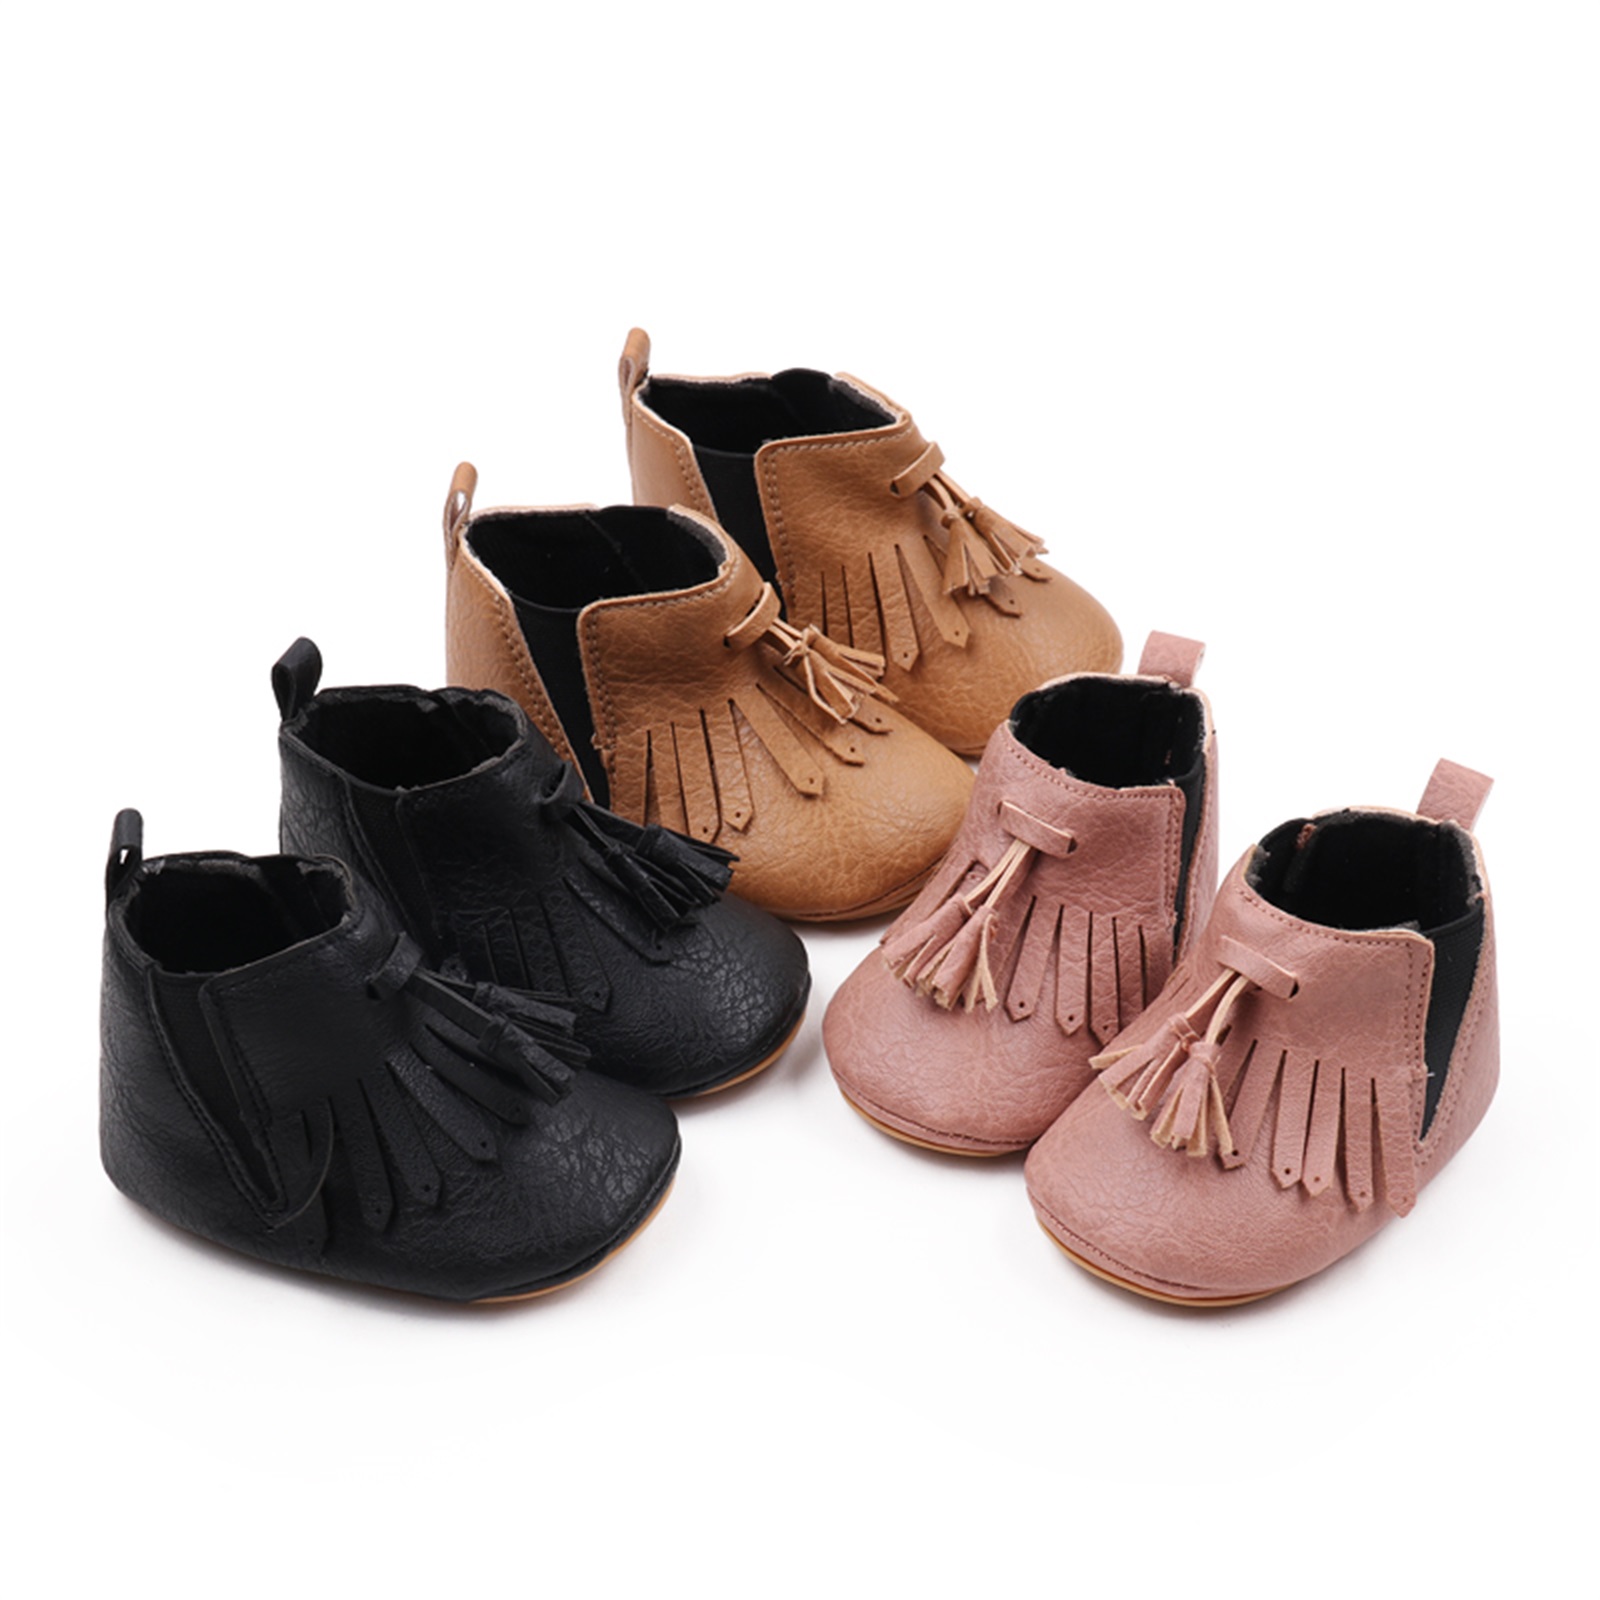 Heartandsoul- 0-18M Newborn Girl Ankle Boots Tassels PU Winter Boots Warm